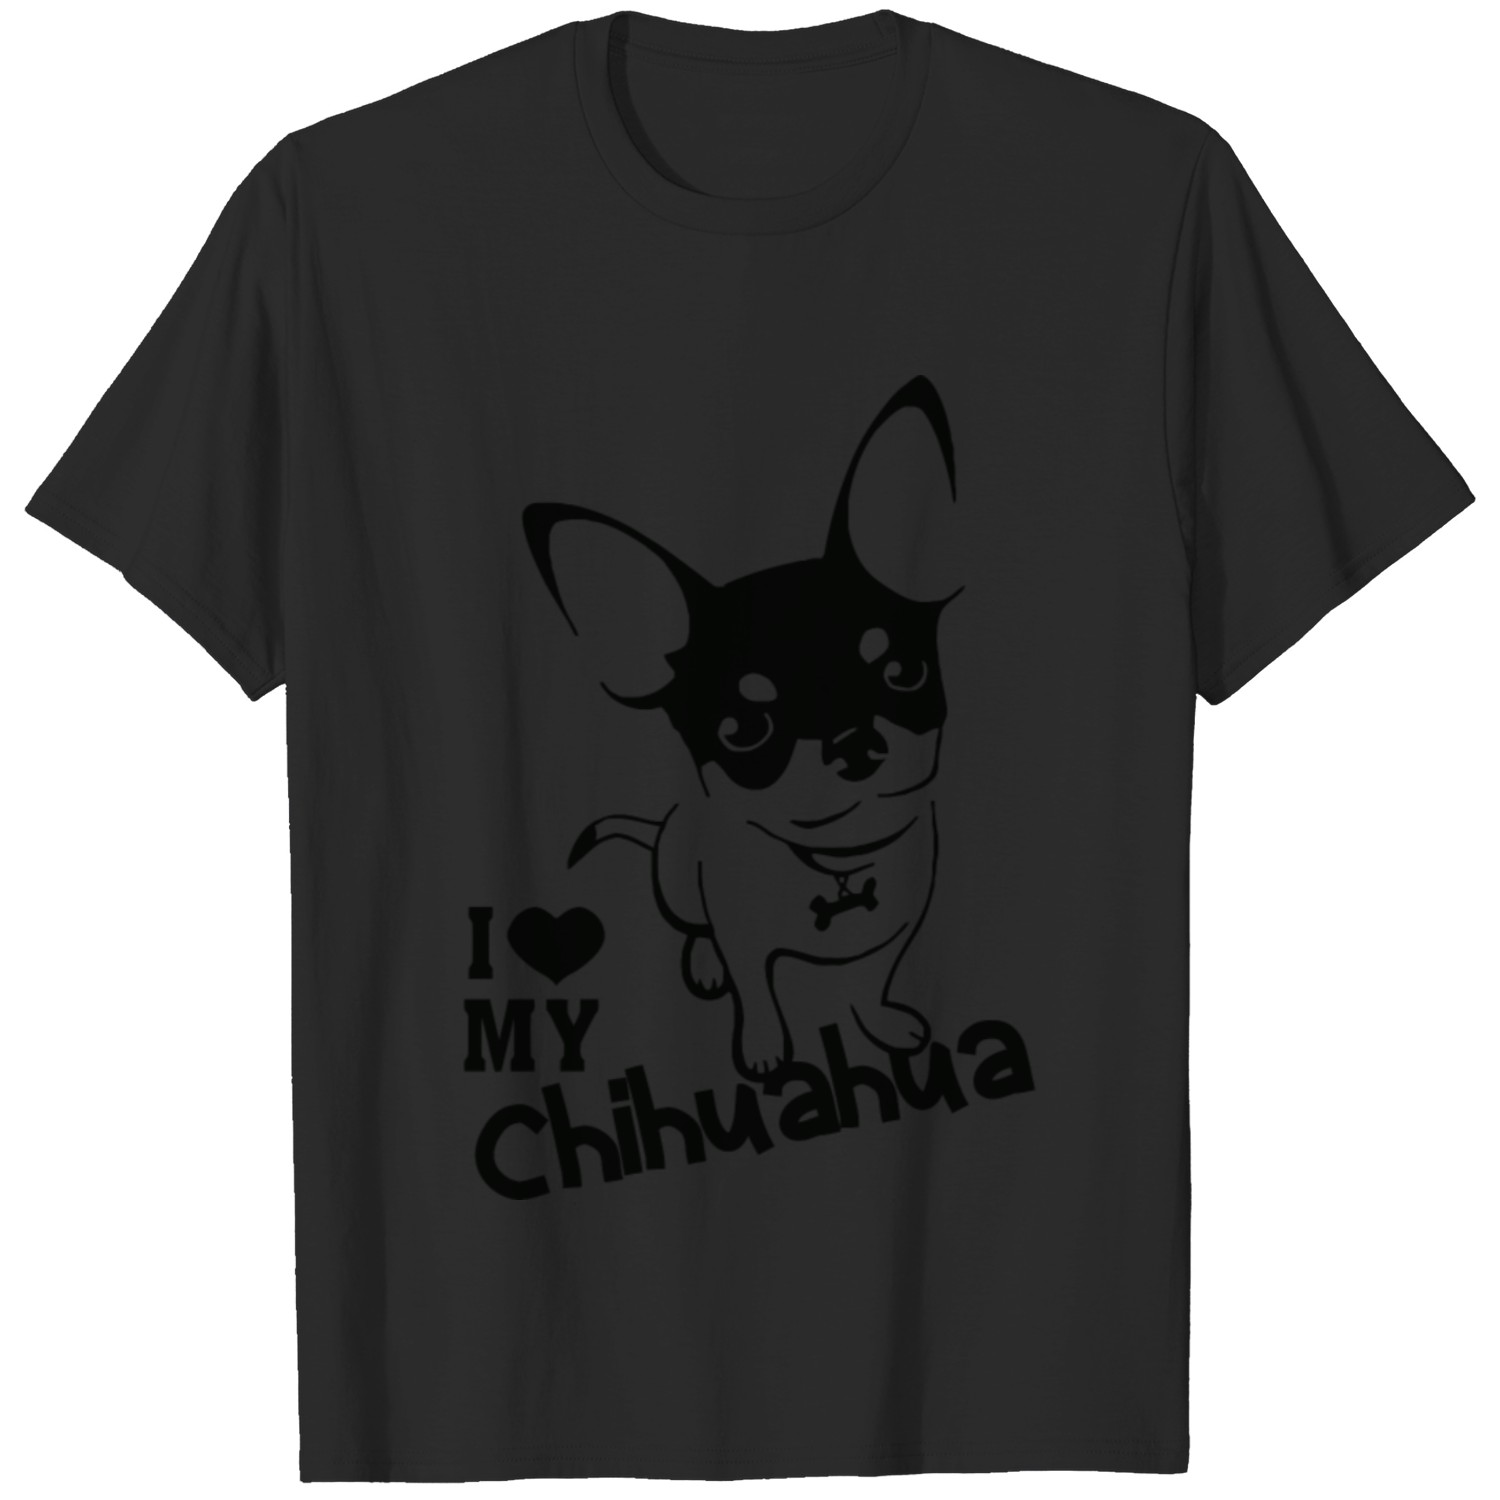 I love my chihuahua T-shirt